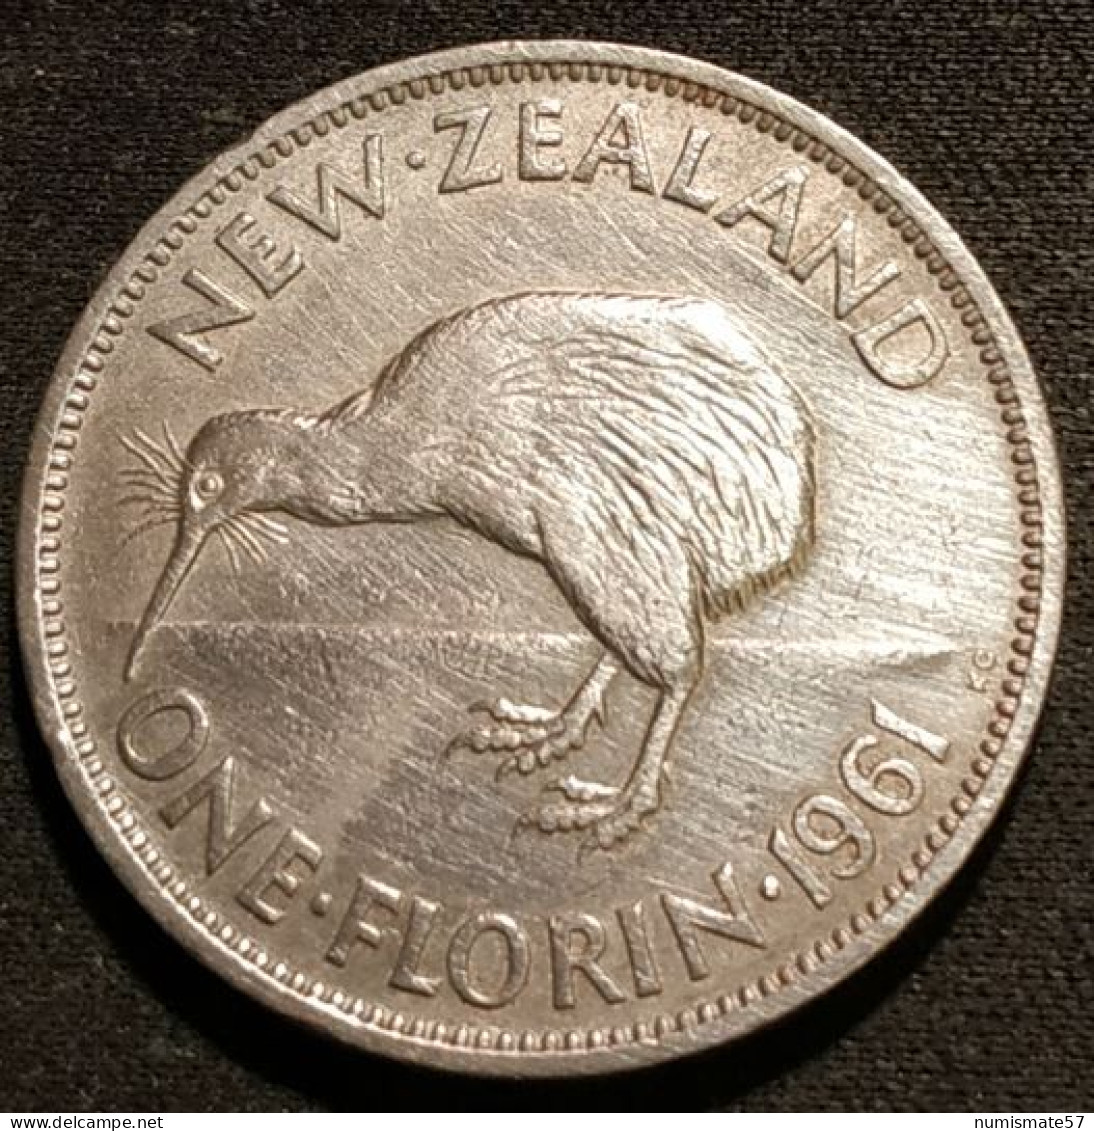 NOUVELLE ZELANDE - NEW ZEALAND - ONE - 1 FLORIN 1961 - Elisabeth II - KM 28.2 - Neuseeland